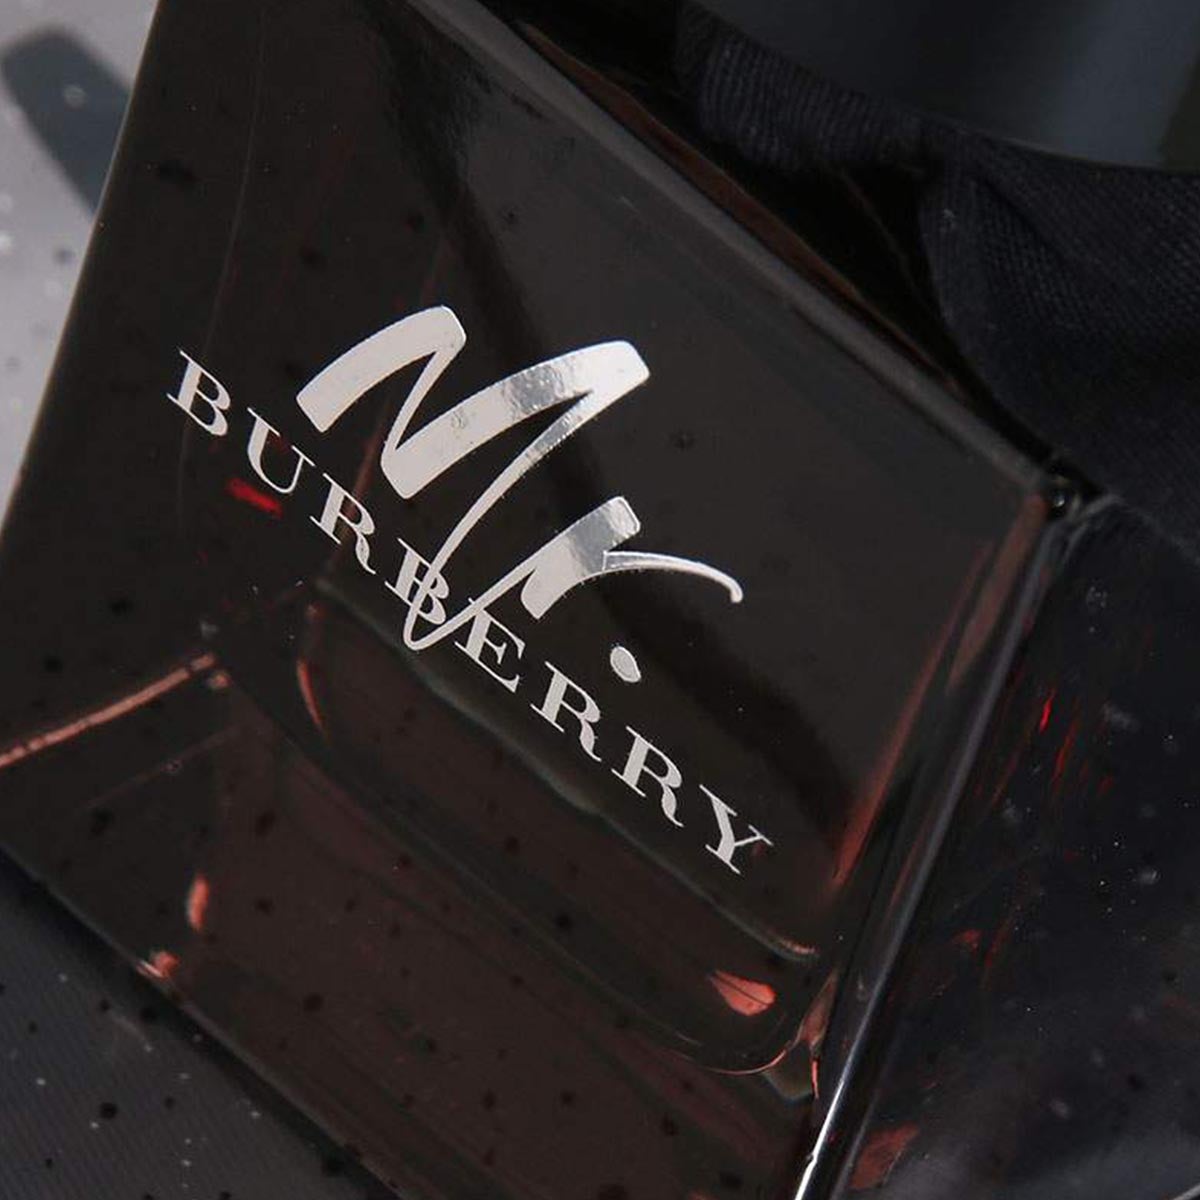 Burberry Mr Burberry EDP | My Perfume Shop Australia